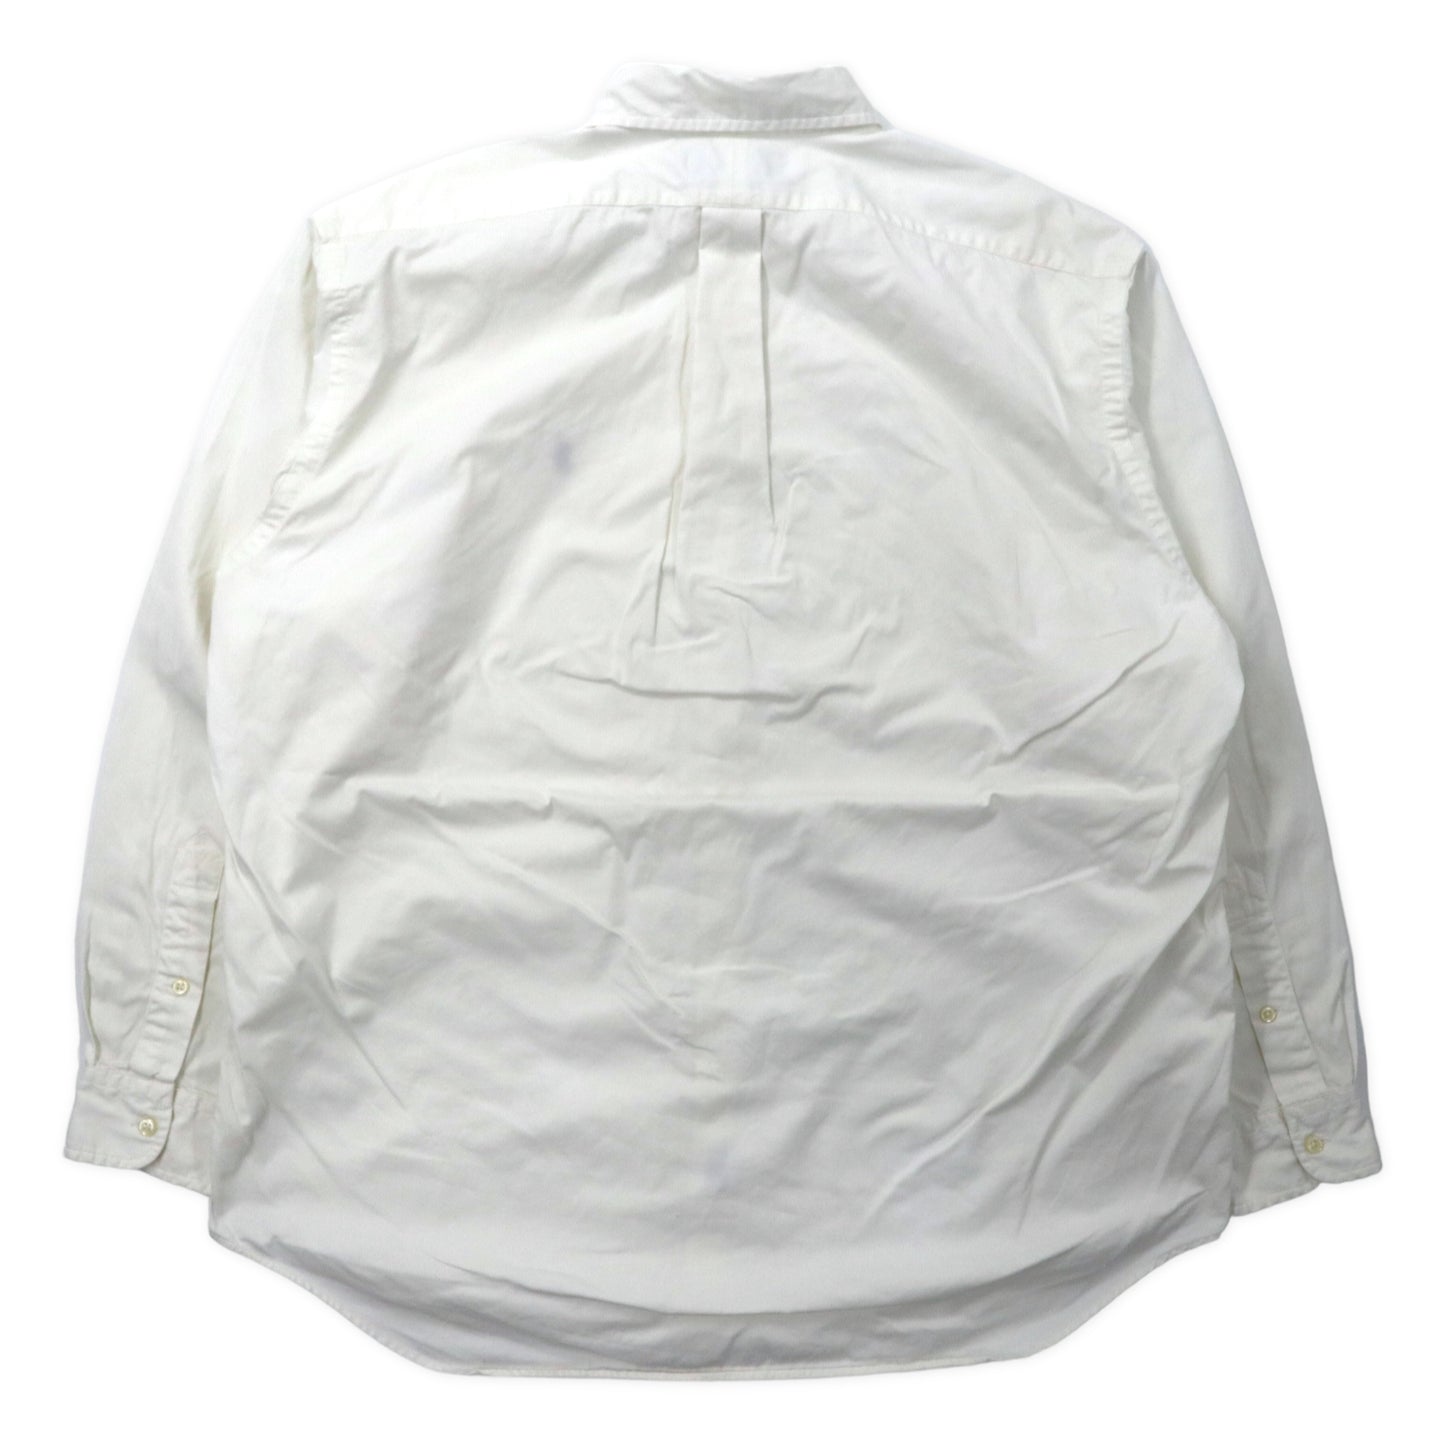 Ralph Lauren BLAKE ボタンダウン オックスフォードシャツ L ホワイト コットン スモールポニー刺繍